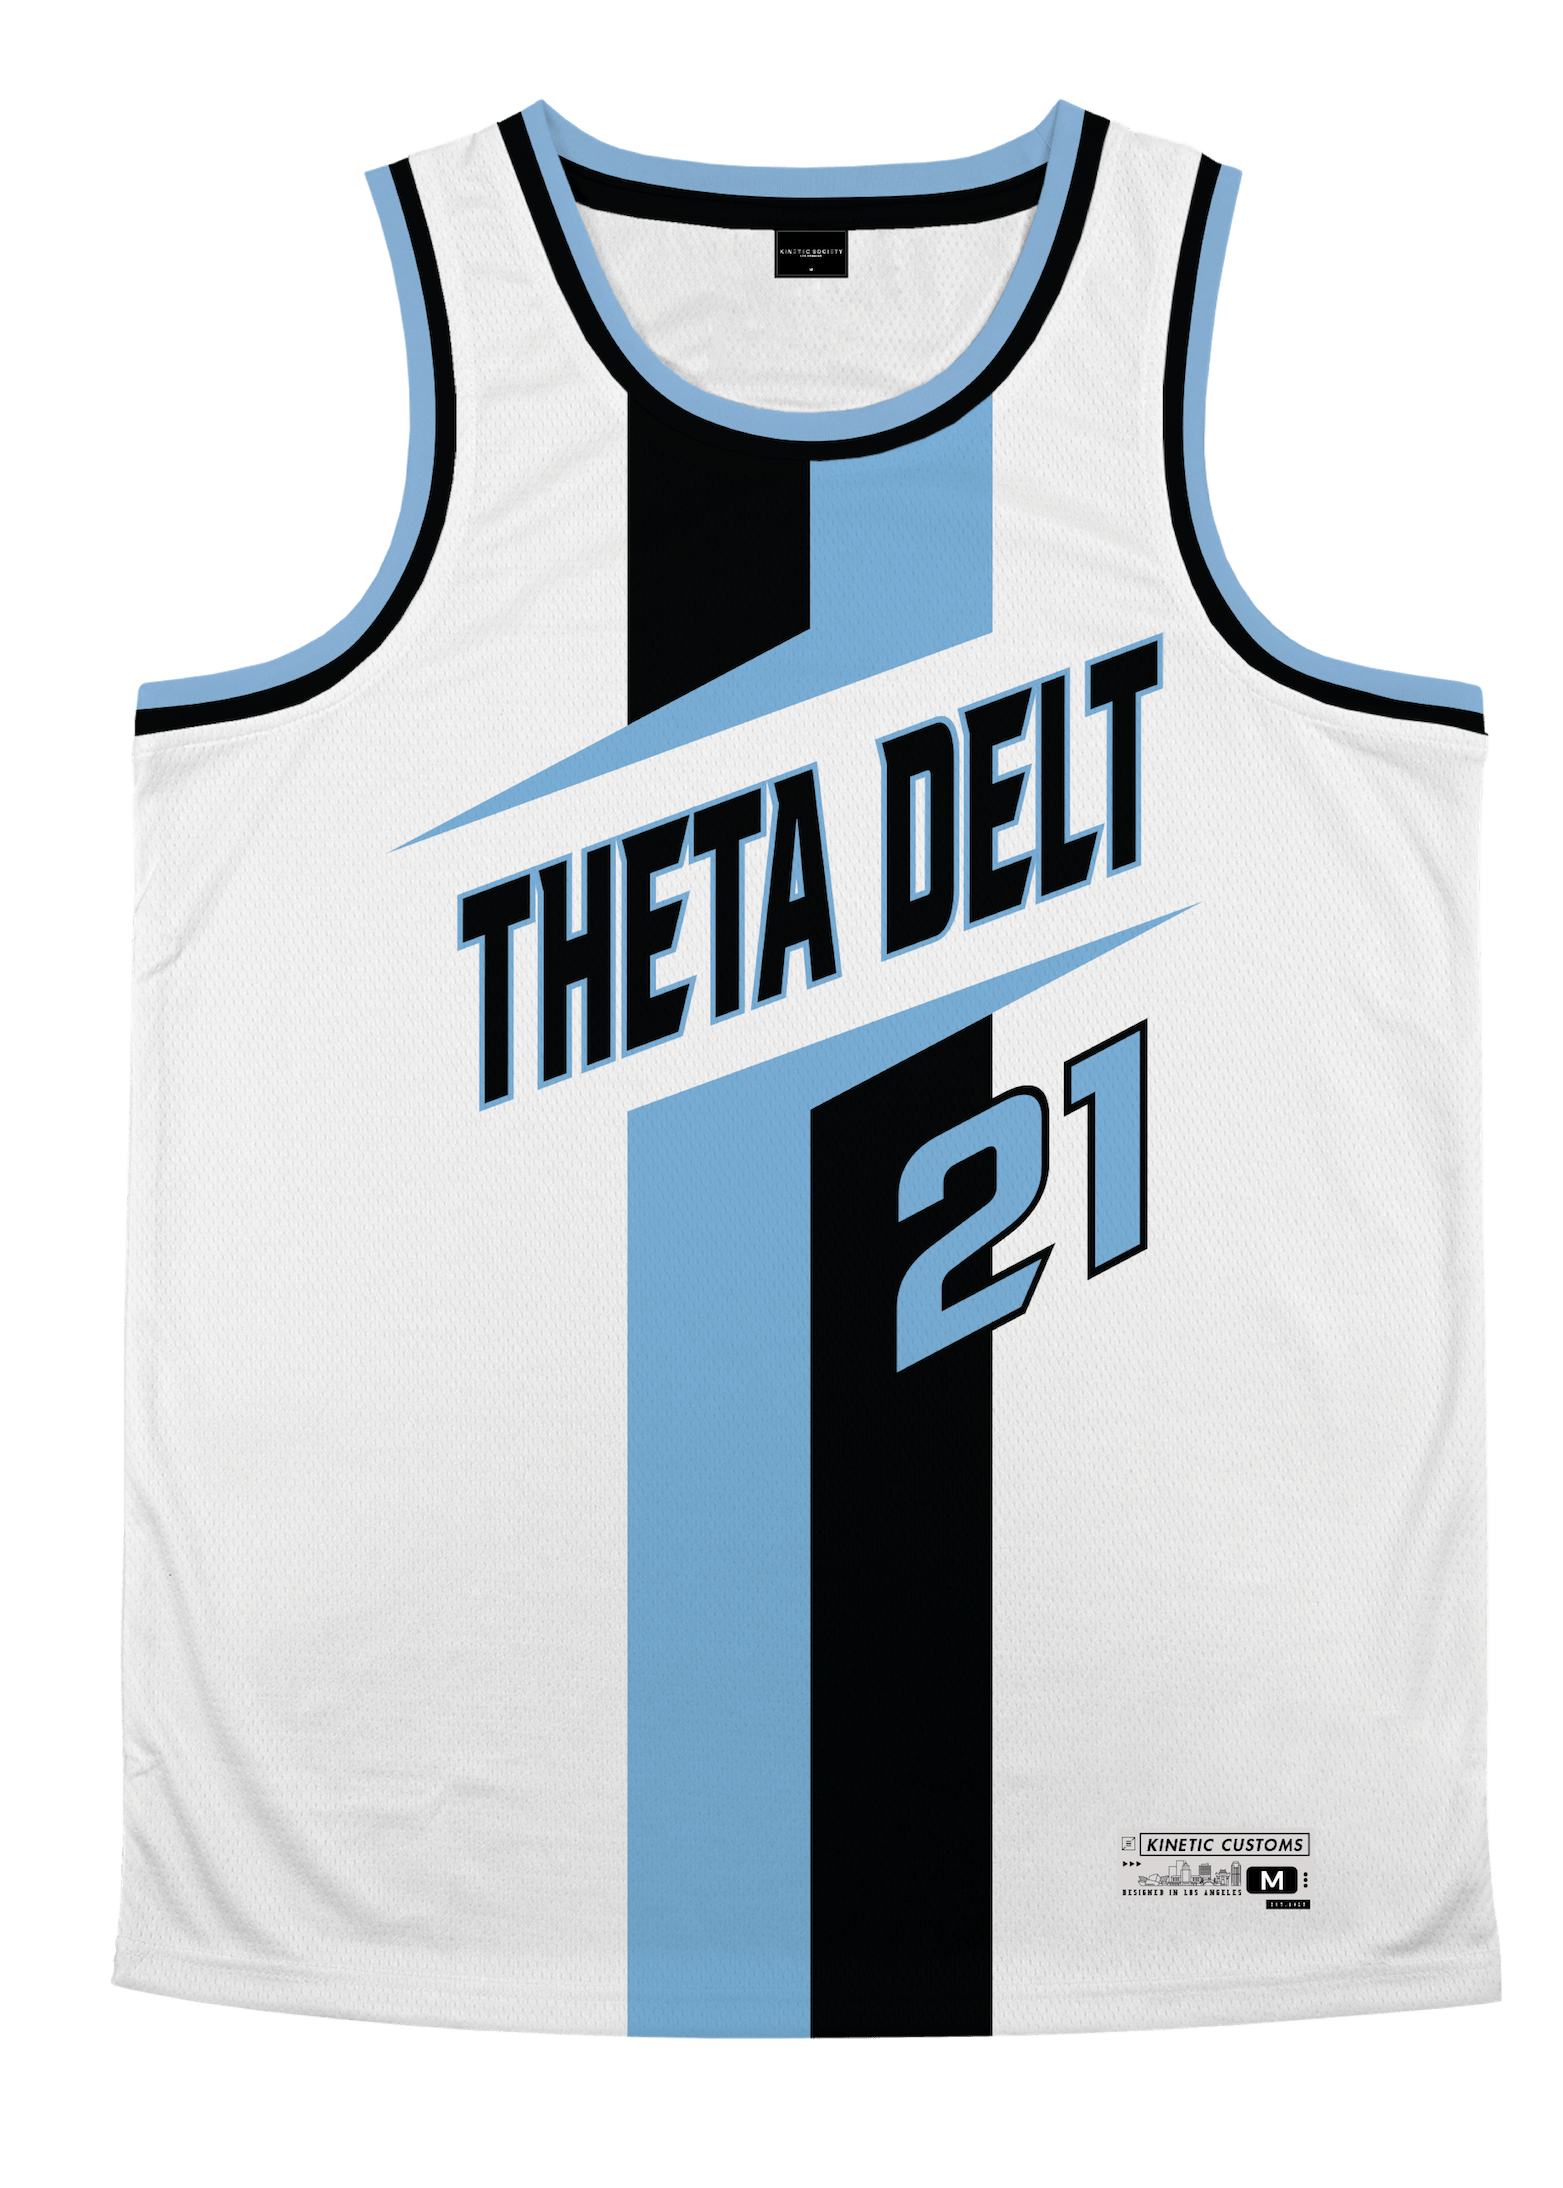 Theta Delta Chi - Middle Child Basketball Jersey Premium Basketball Kinetic Society LLC 